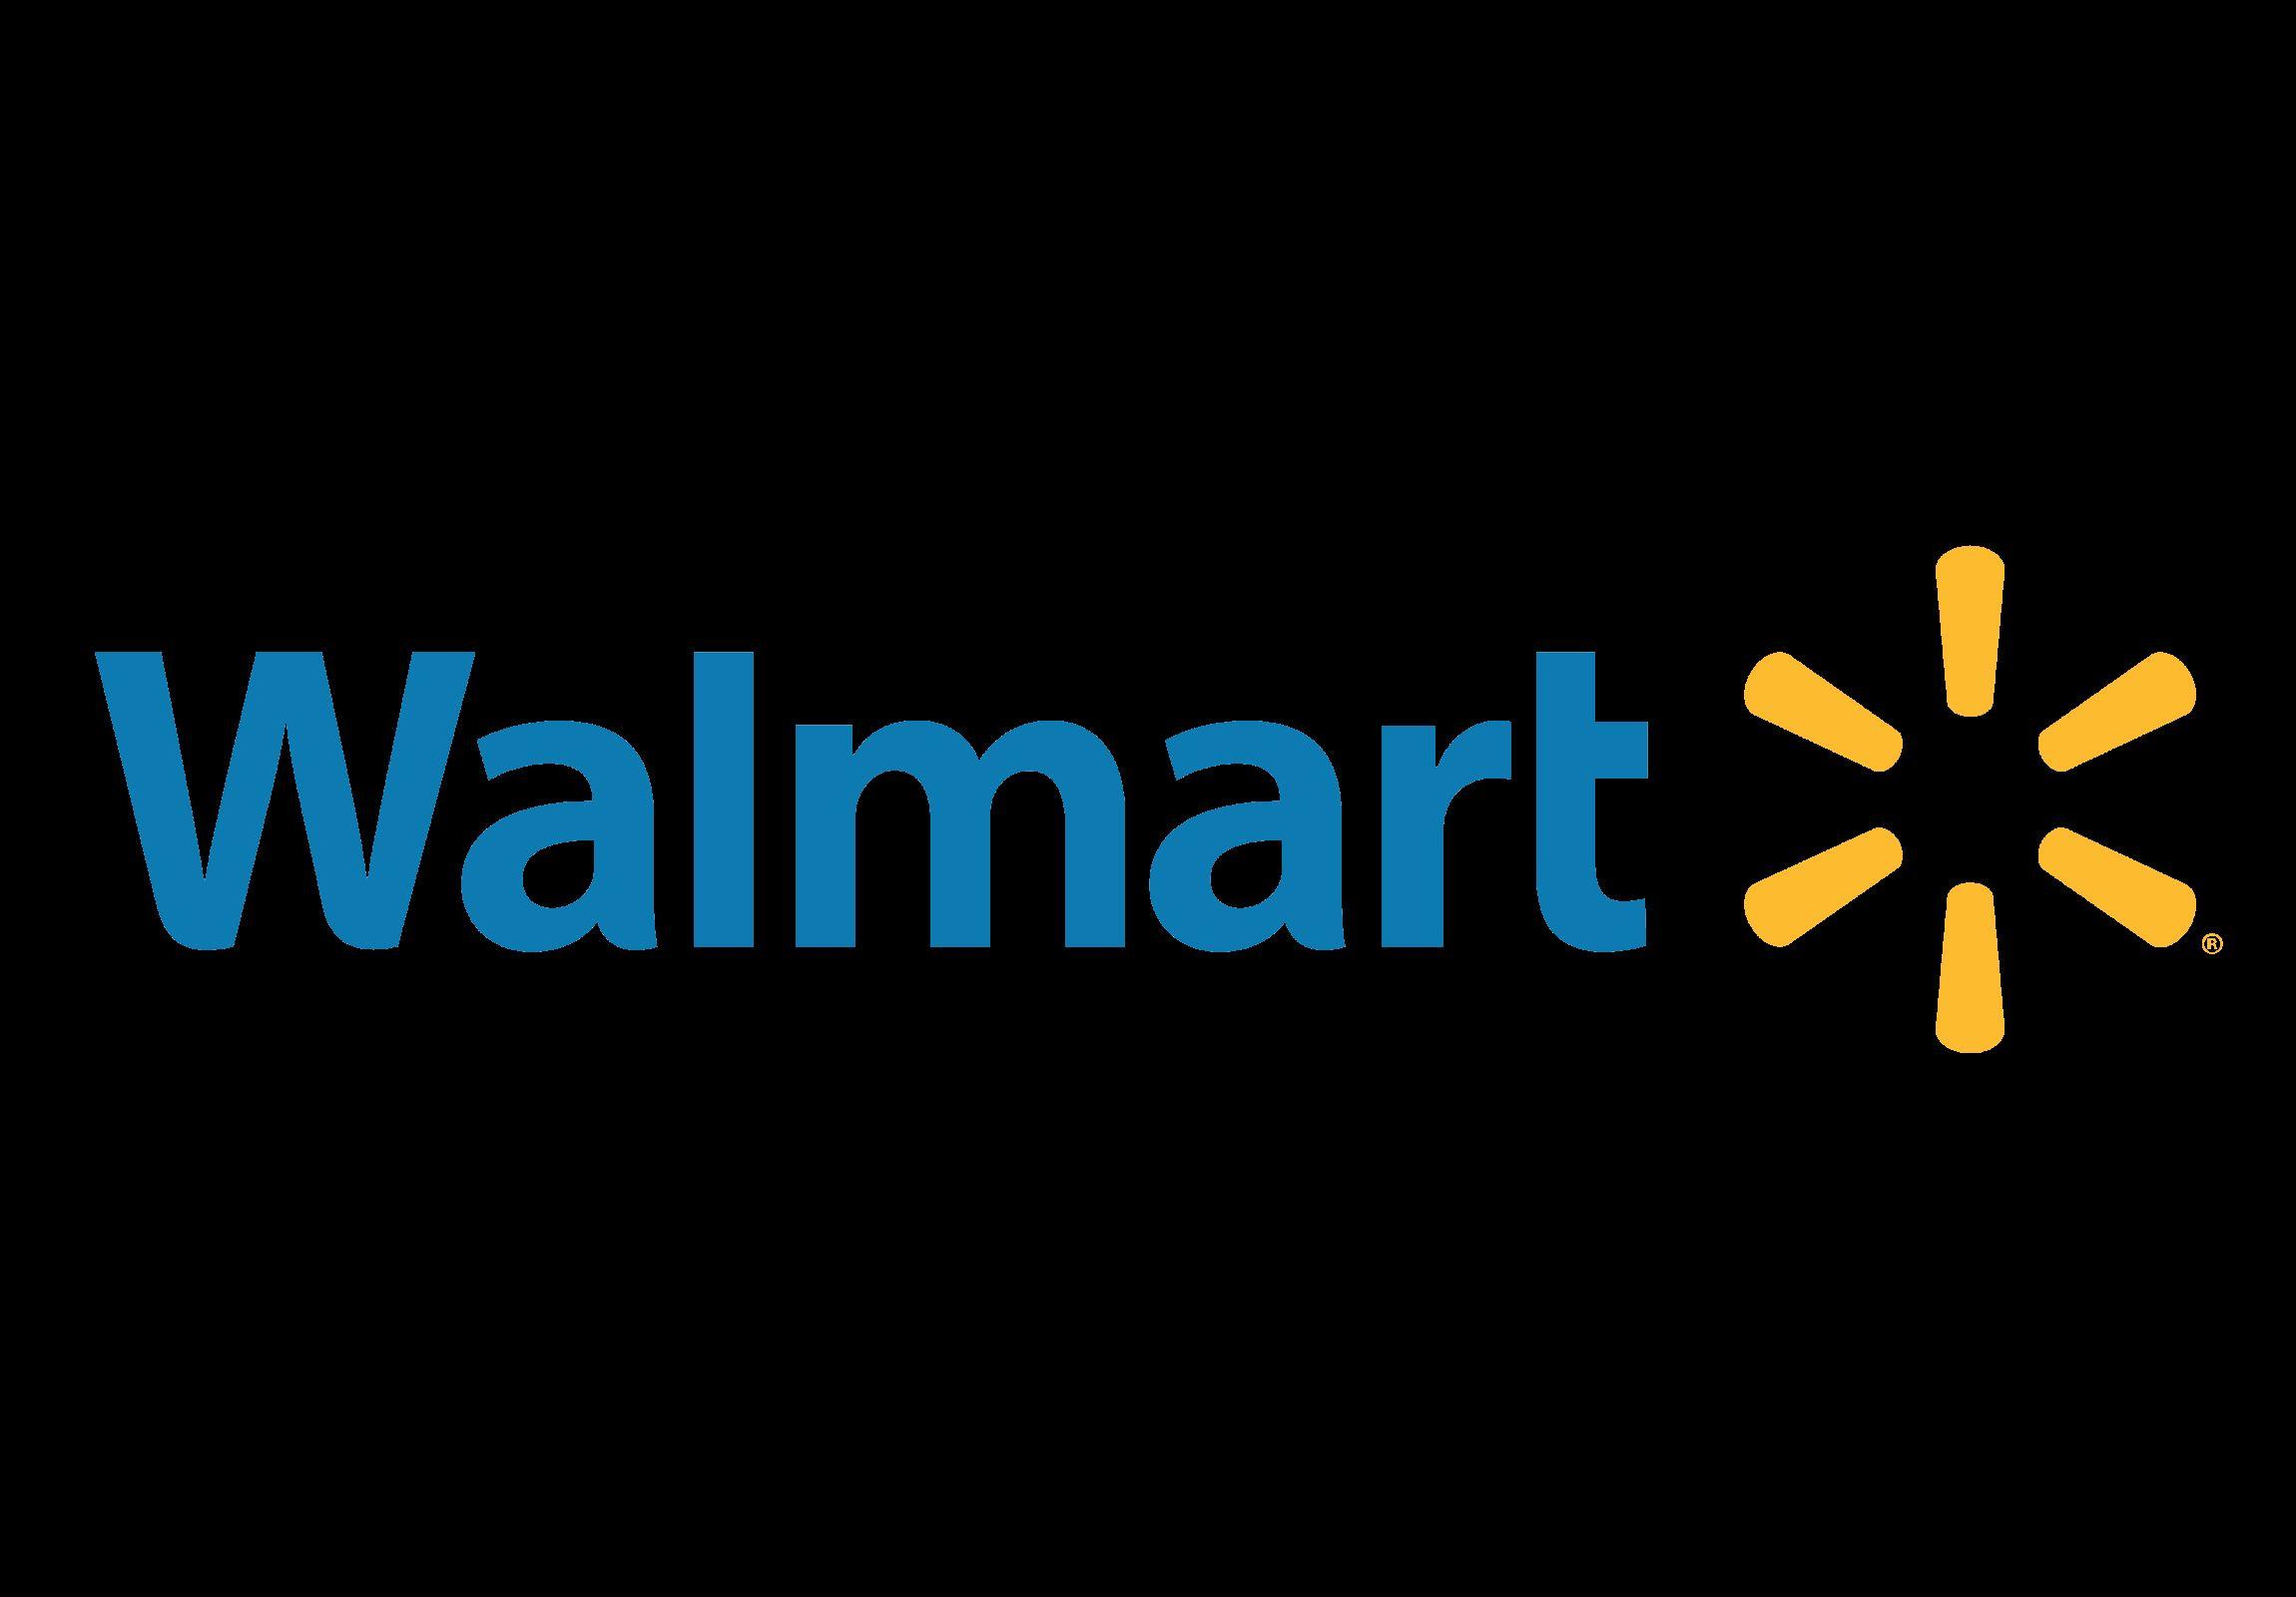 Wealmart Logo - Walmart Logo, Walmart Symbol, History and Evolution